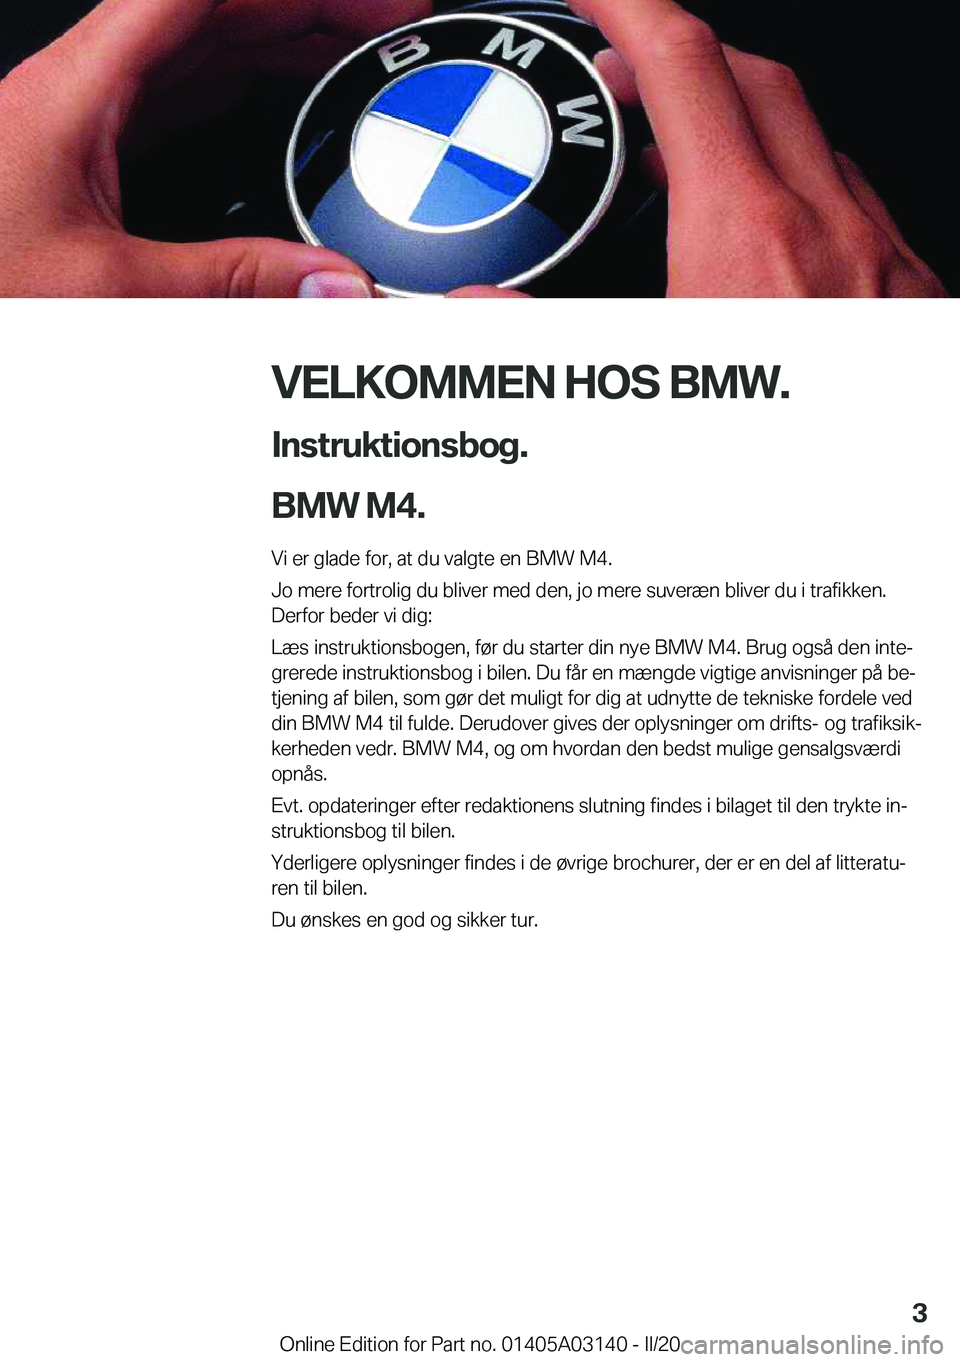 BMW M4 2020  InstruktionsbØger (in Danish) �V�E�L�K�O�M�M�E�N��H�O�S��B�M�W�.
�I�n�s�t�r�u�k�t�i�o�n�s�b�o�g�.
�B�M�W��M�4�. �V�i��e�r��g�l�a�d�e��f�o�r�,��a�t��d�u��v�a�l�g�t�e��e�n��B�M�W��M�4�.
�J�o��m�e�r�e��f�o�r�t�r�o�l�i�g